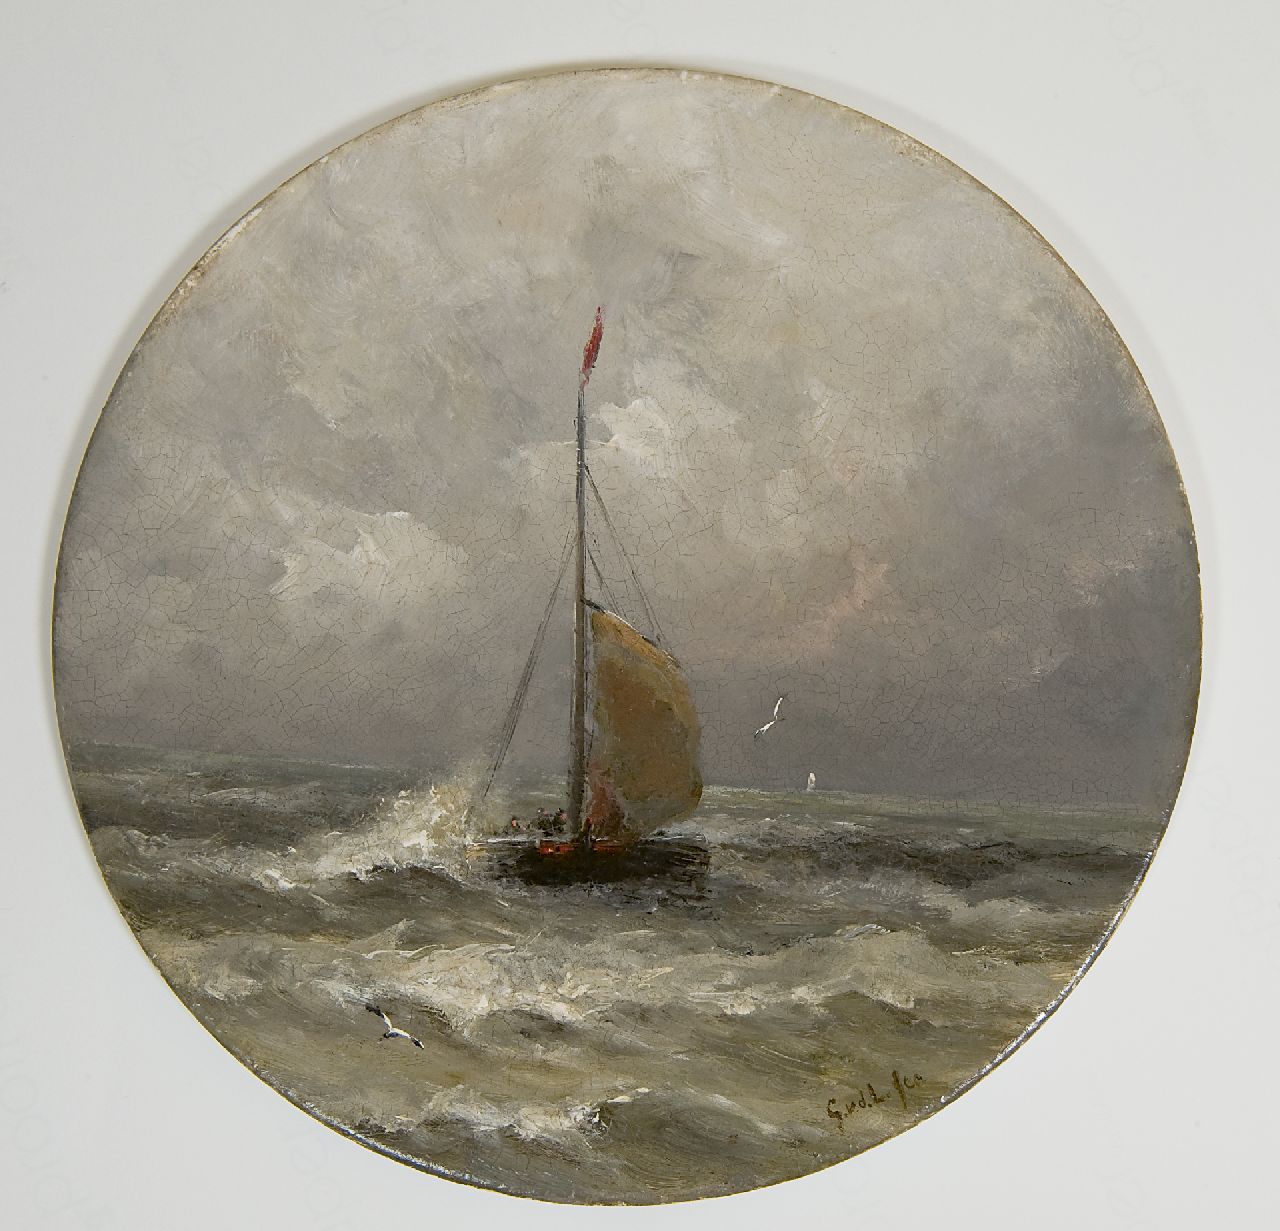 Laan G. van der | Gerard van der Laan, Fishing boat at sea, Öl auf Porzellan 28,3 x 28,3 cm, signed with initials l.r.